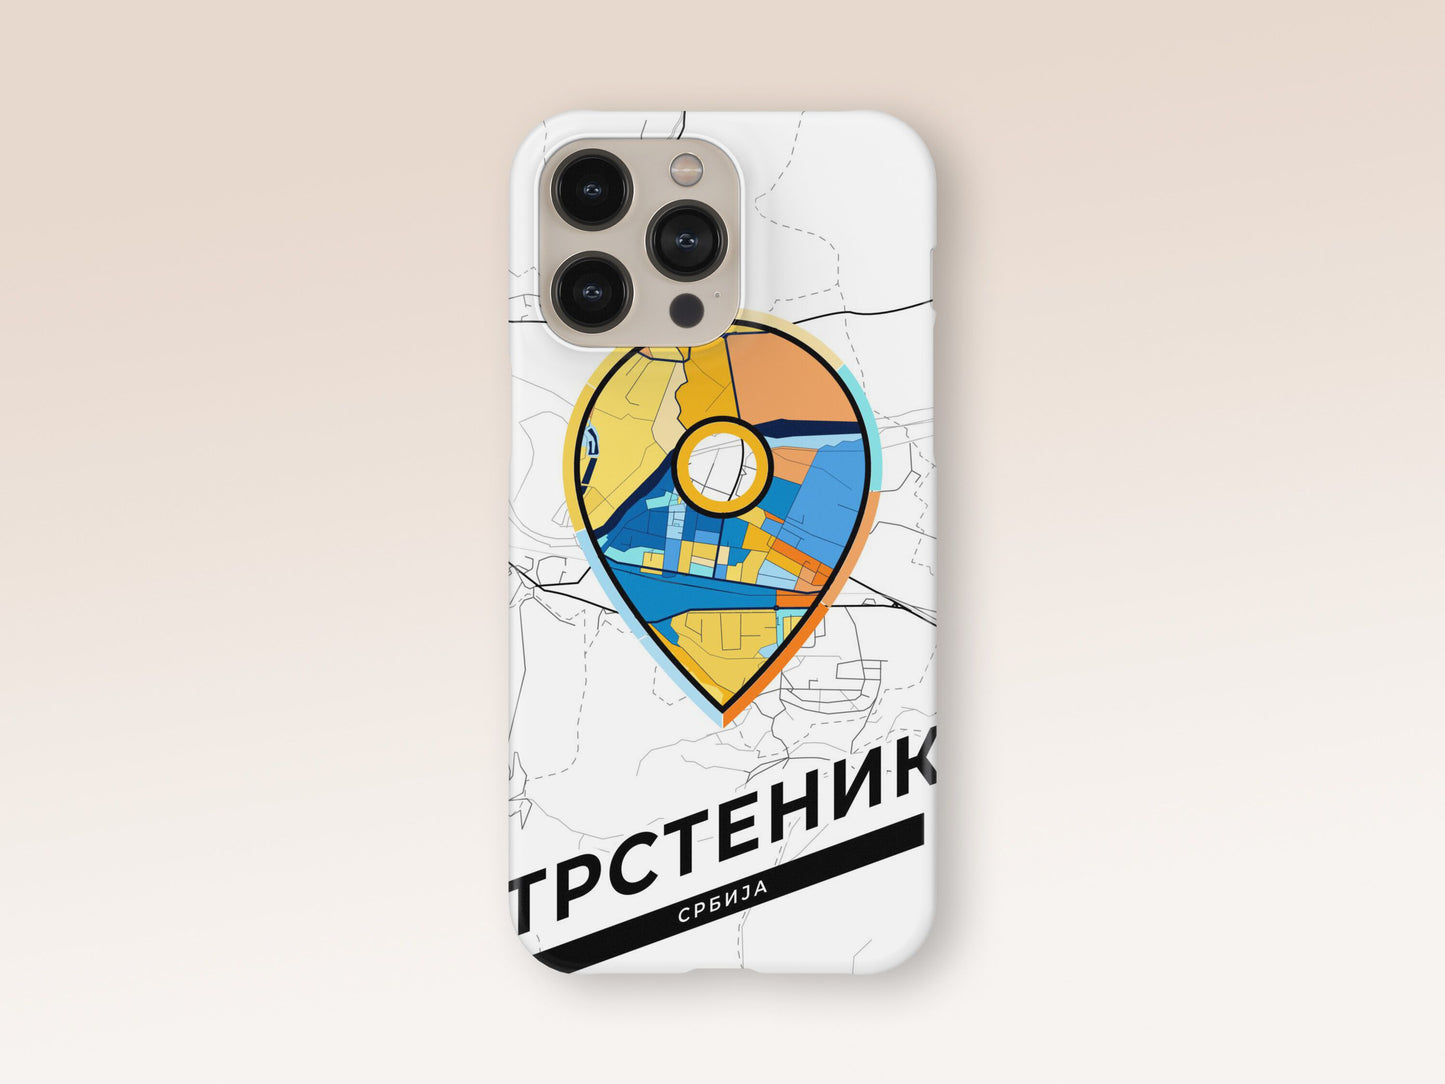 Trstenik Serbia slim phone case with colorful icon 1